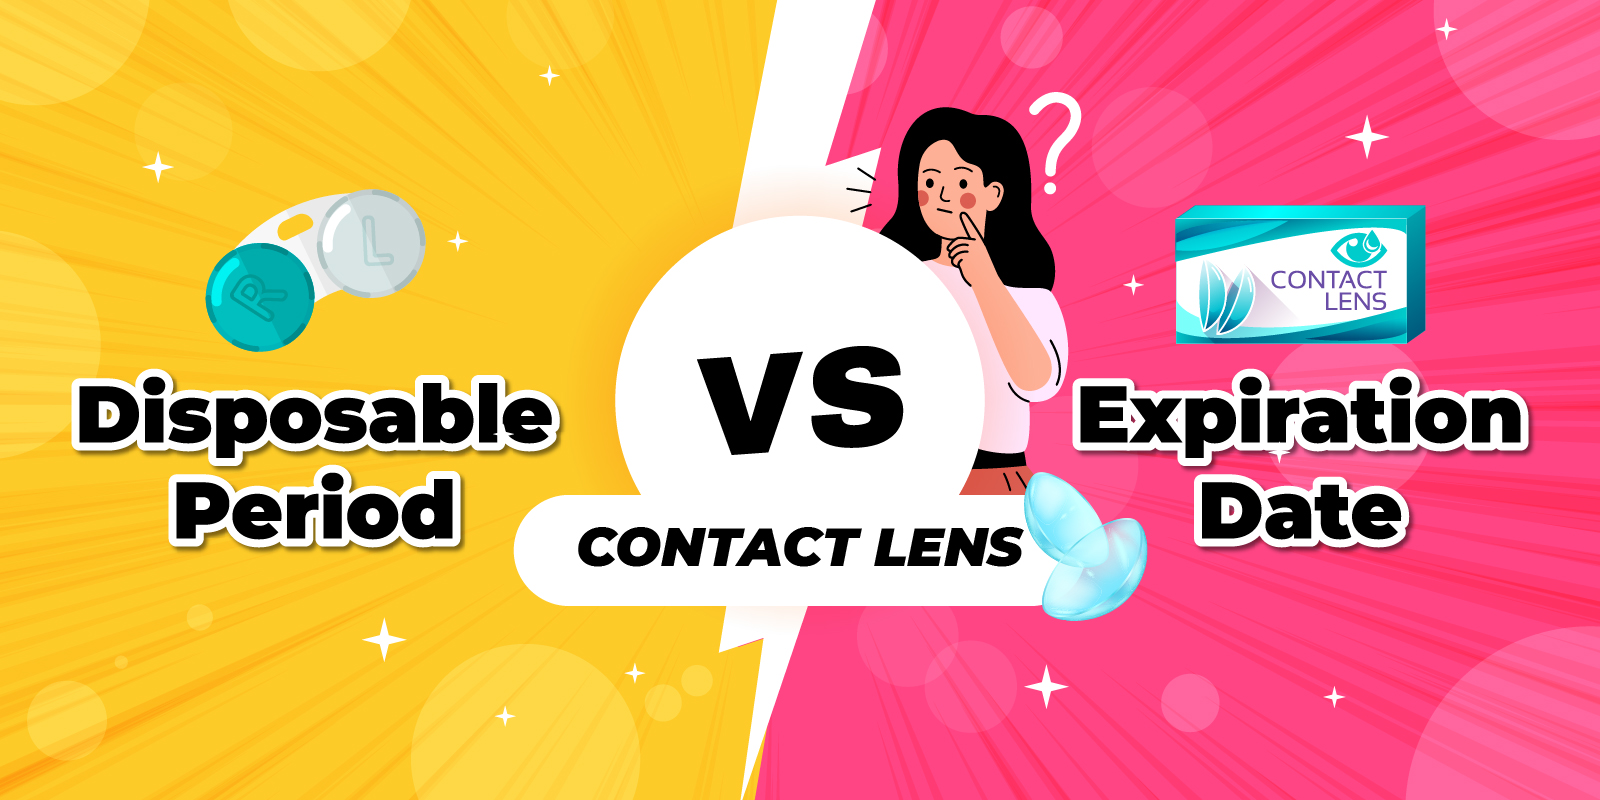 Contact Lens Disposable Period vs Expiration Date